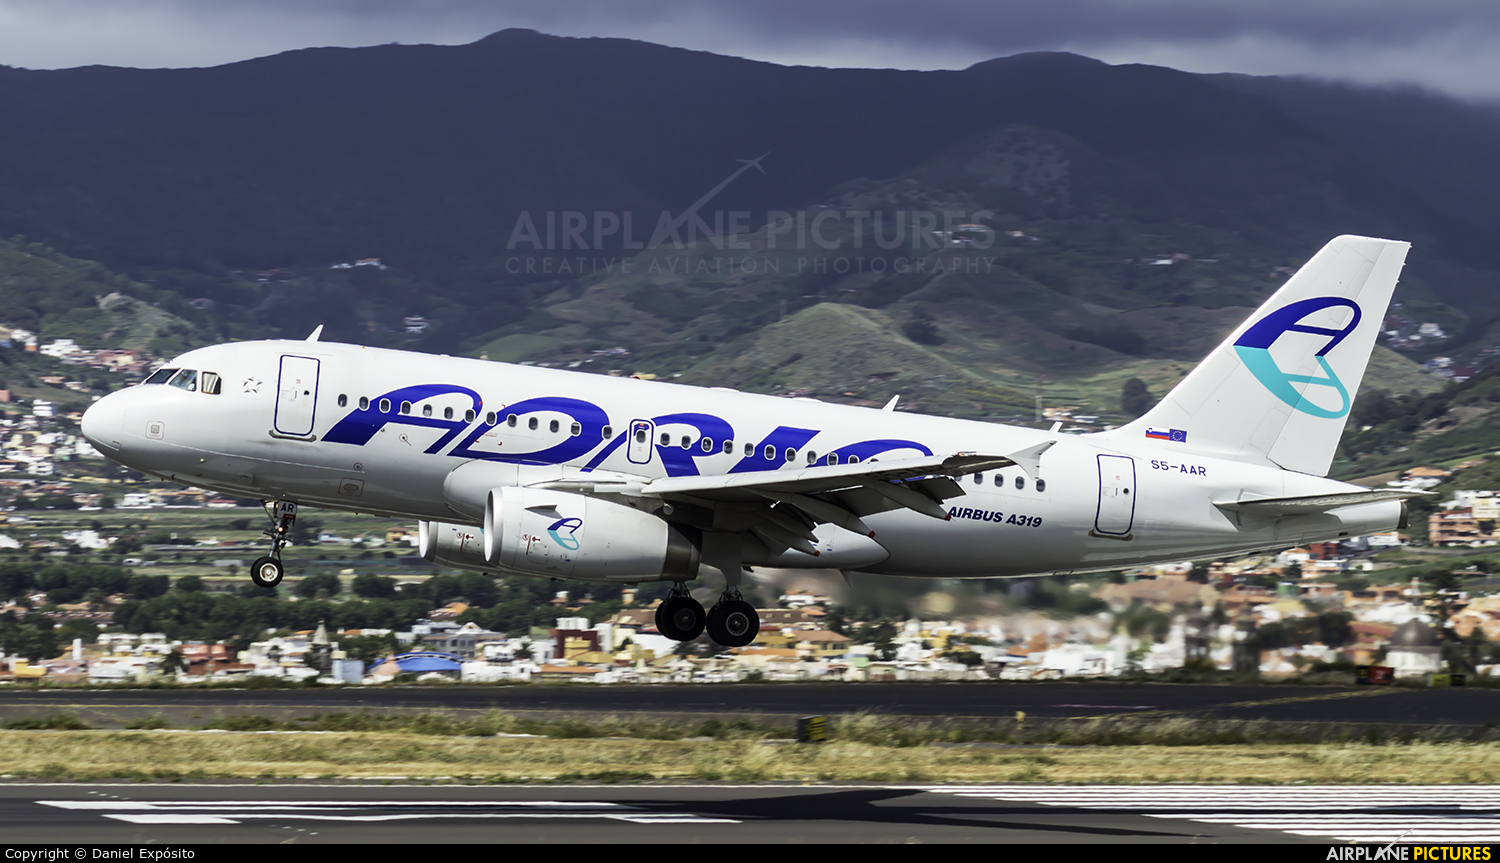 Adria Airways S5-AAR aircraft at Tenerife Norte - Los Rodeos